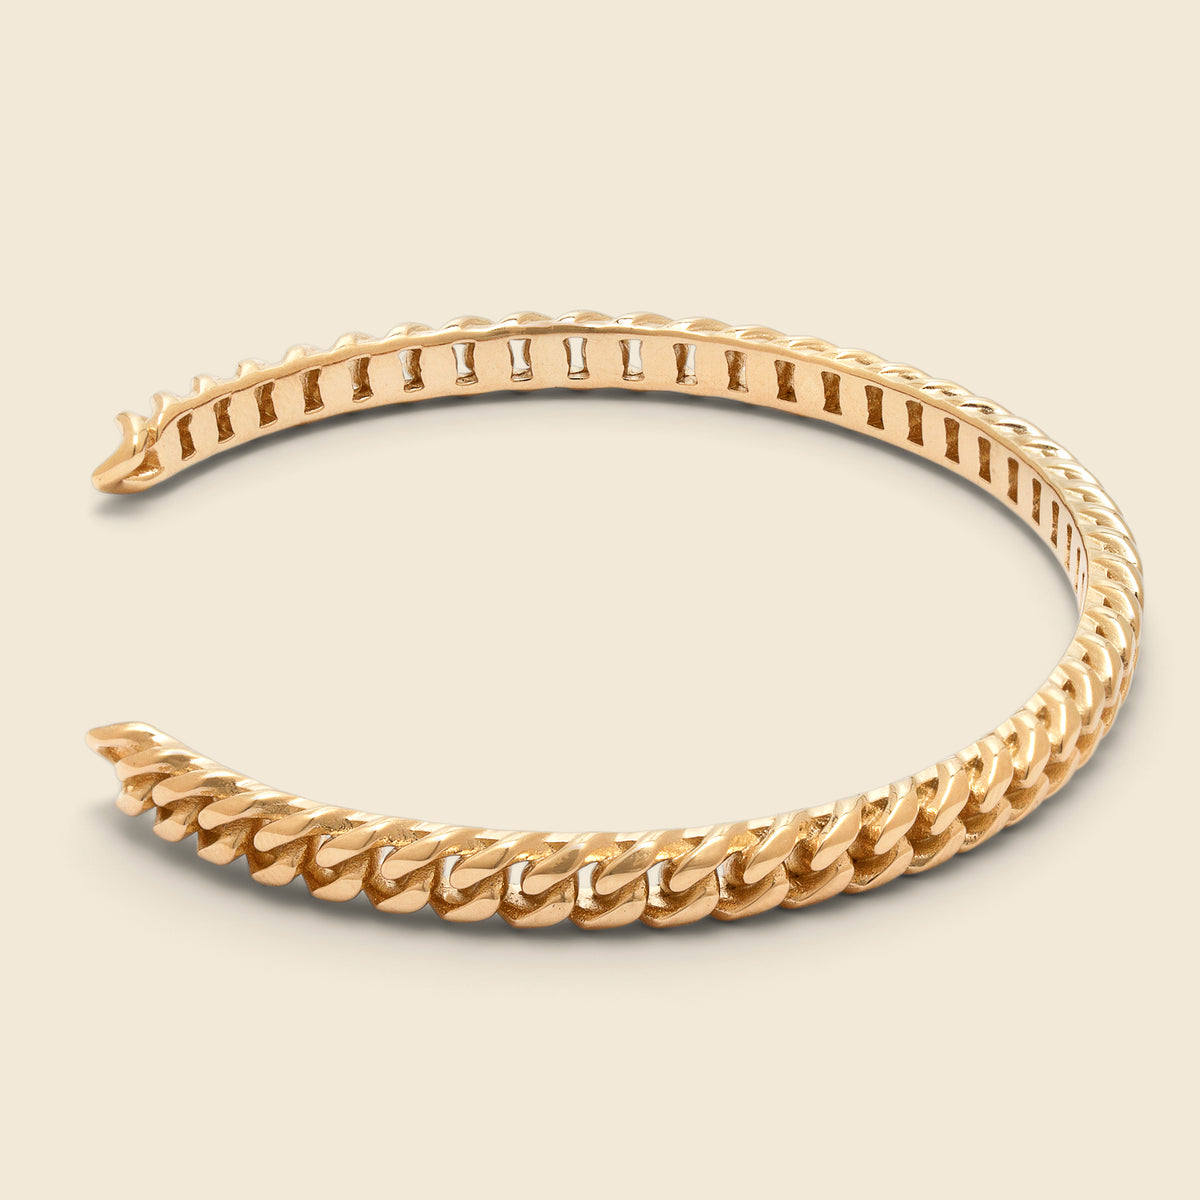 Miansai Men's 5mm Figaro Chain Bracelet